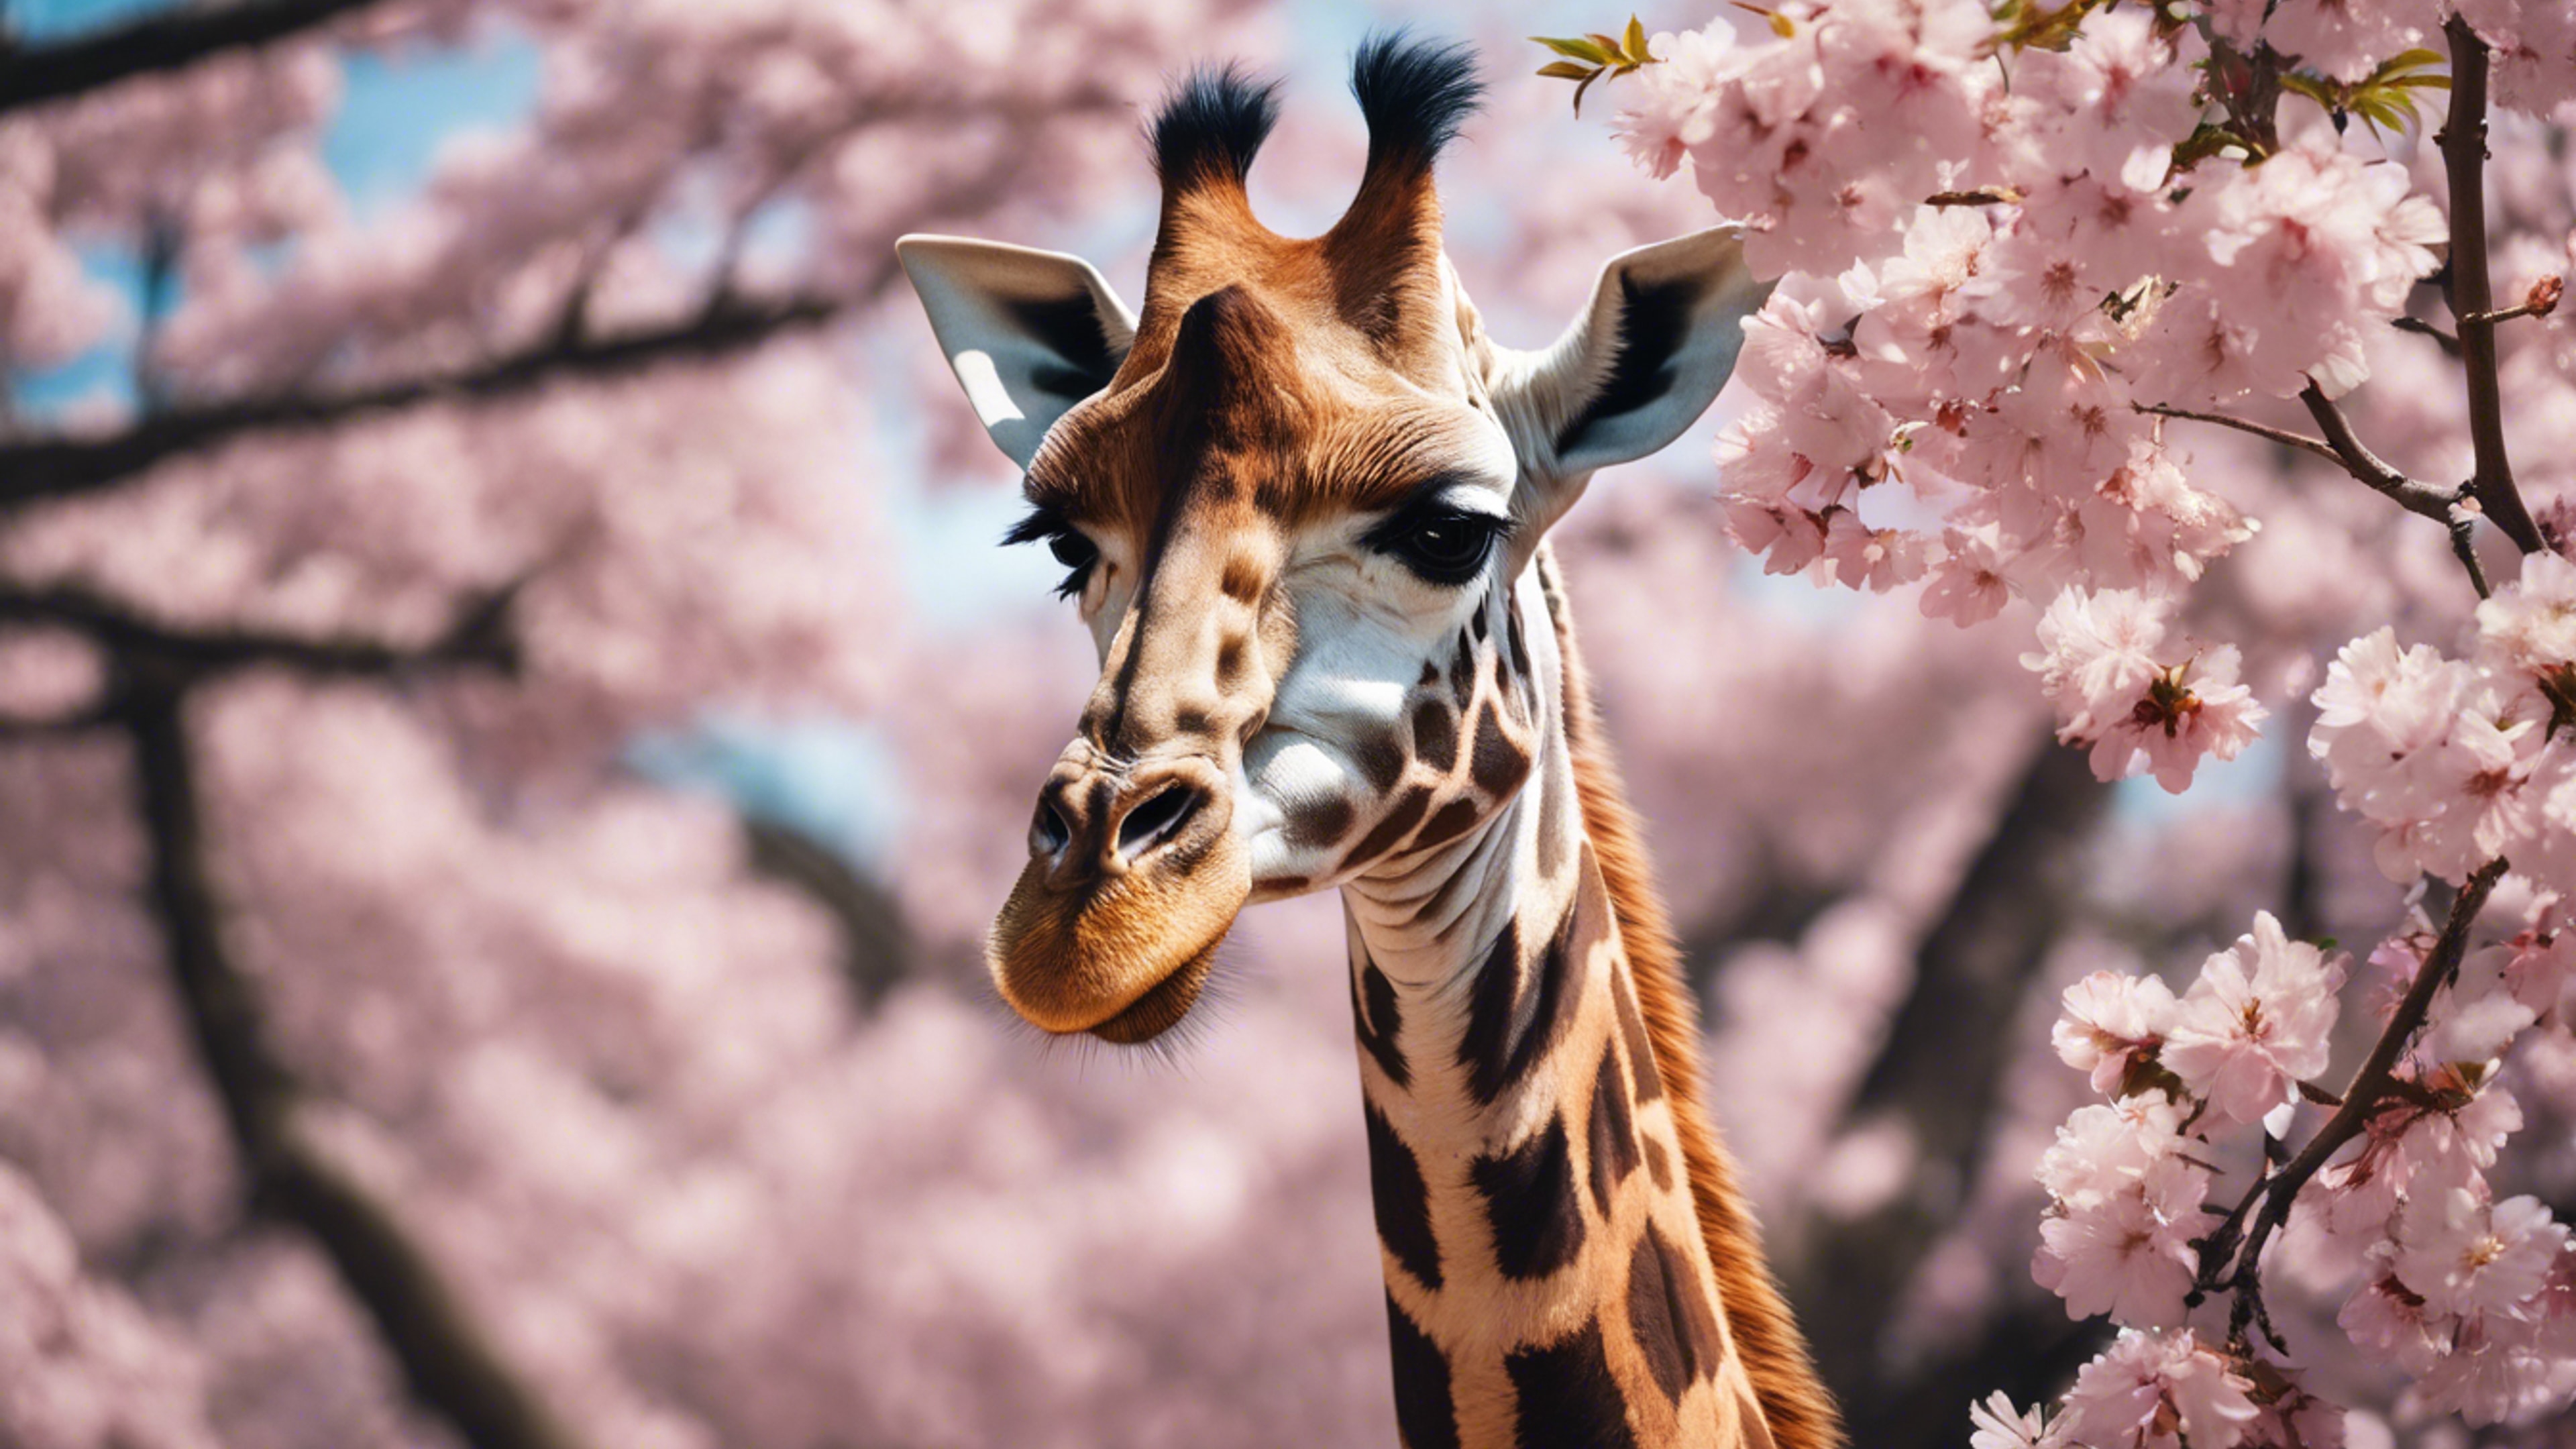 A giraffe hiding playfully behind a cherry blossom tree in full bloom. Behang[1212acafafba4b4d89bd]